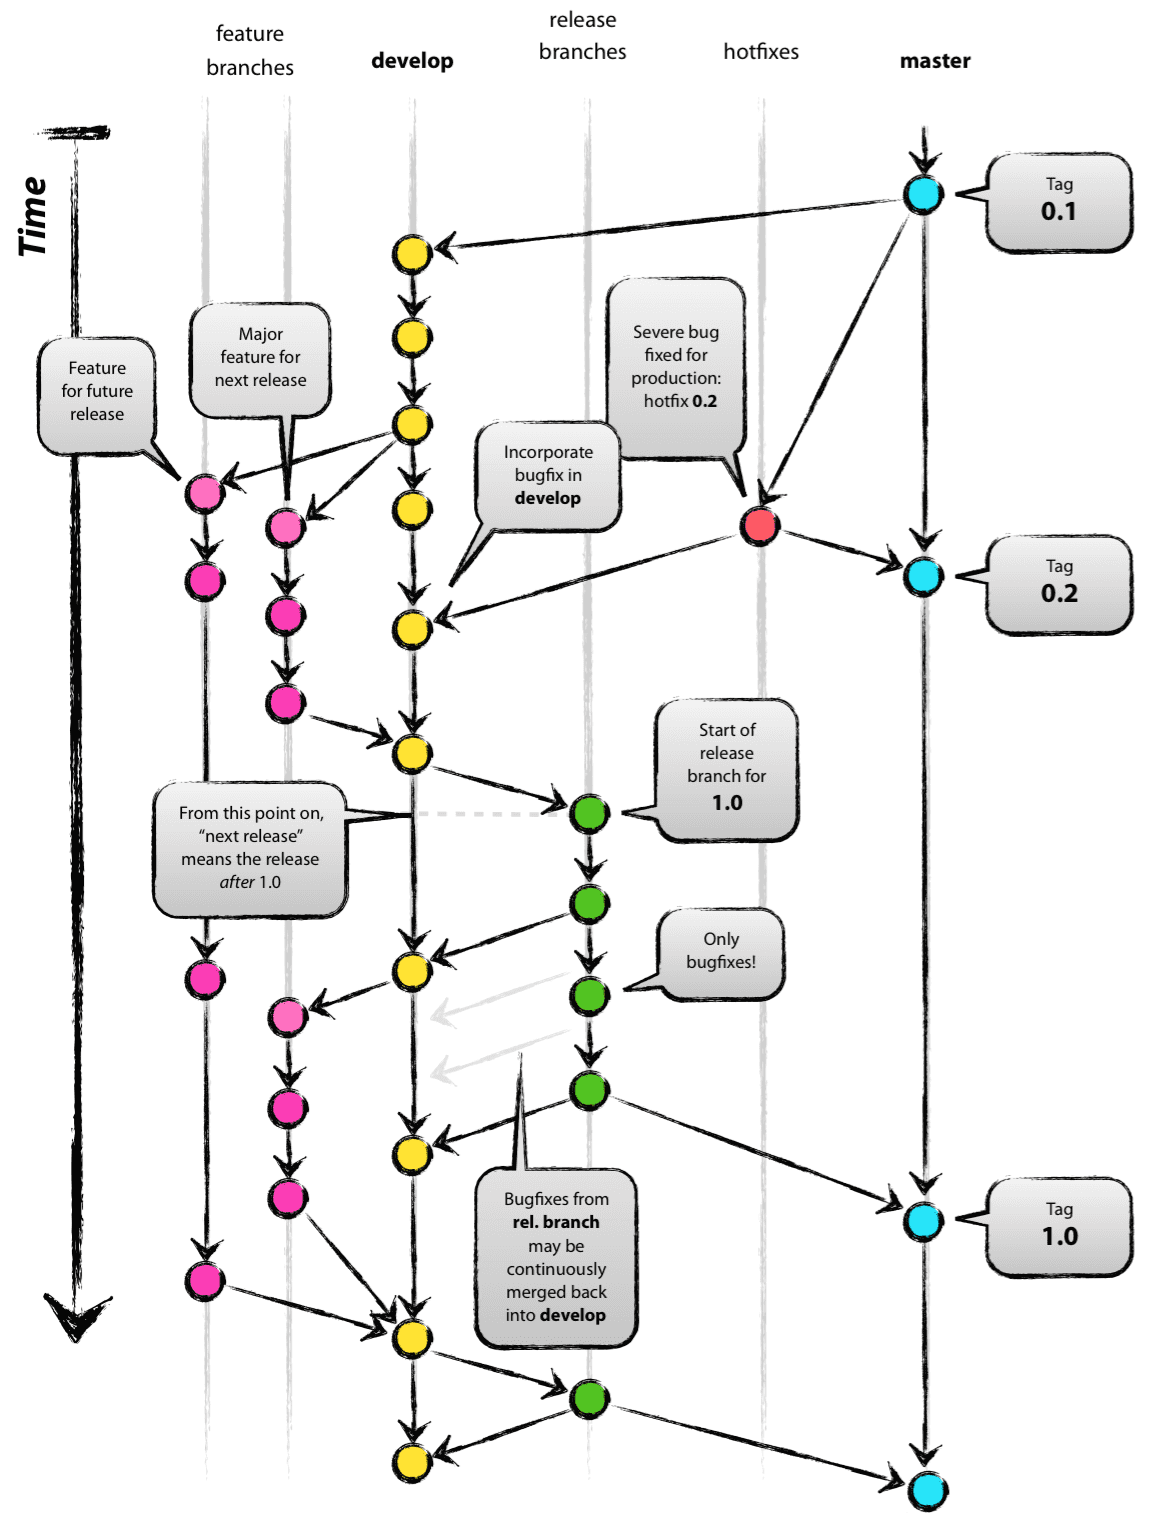 gitflow 출처: A successful Git branching model